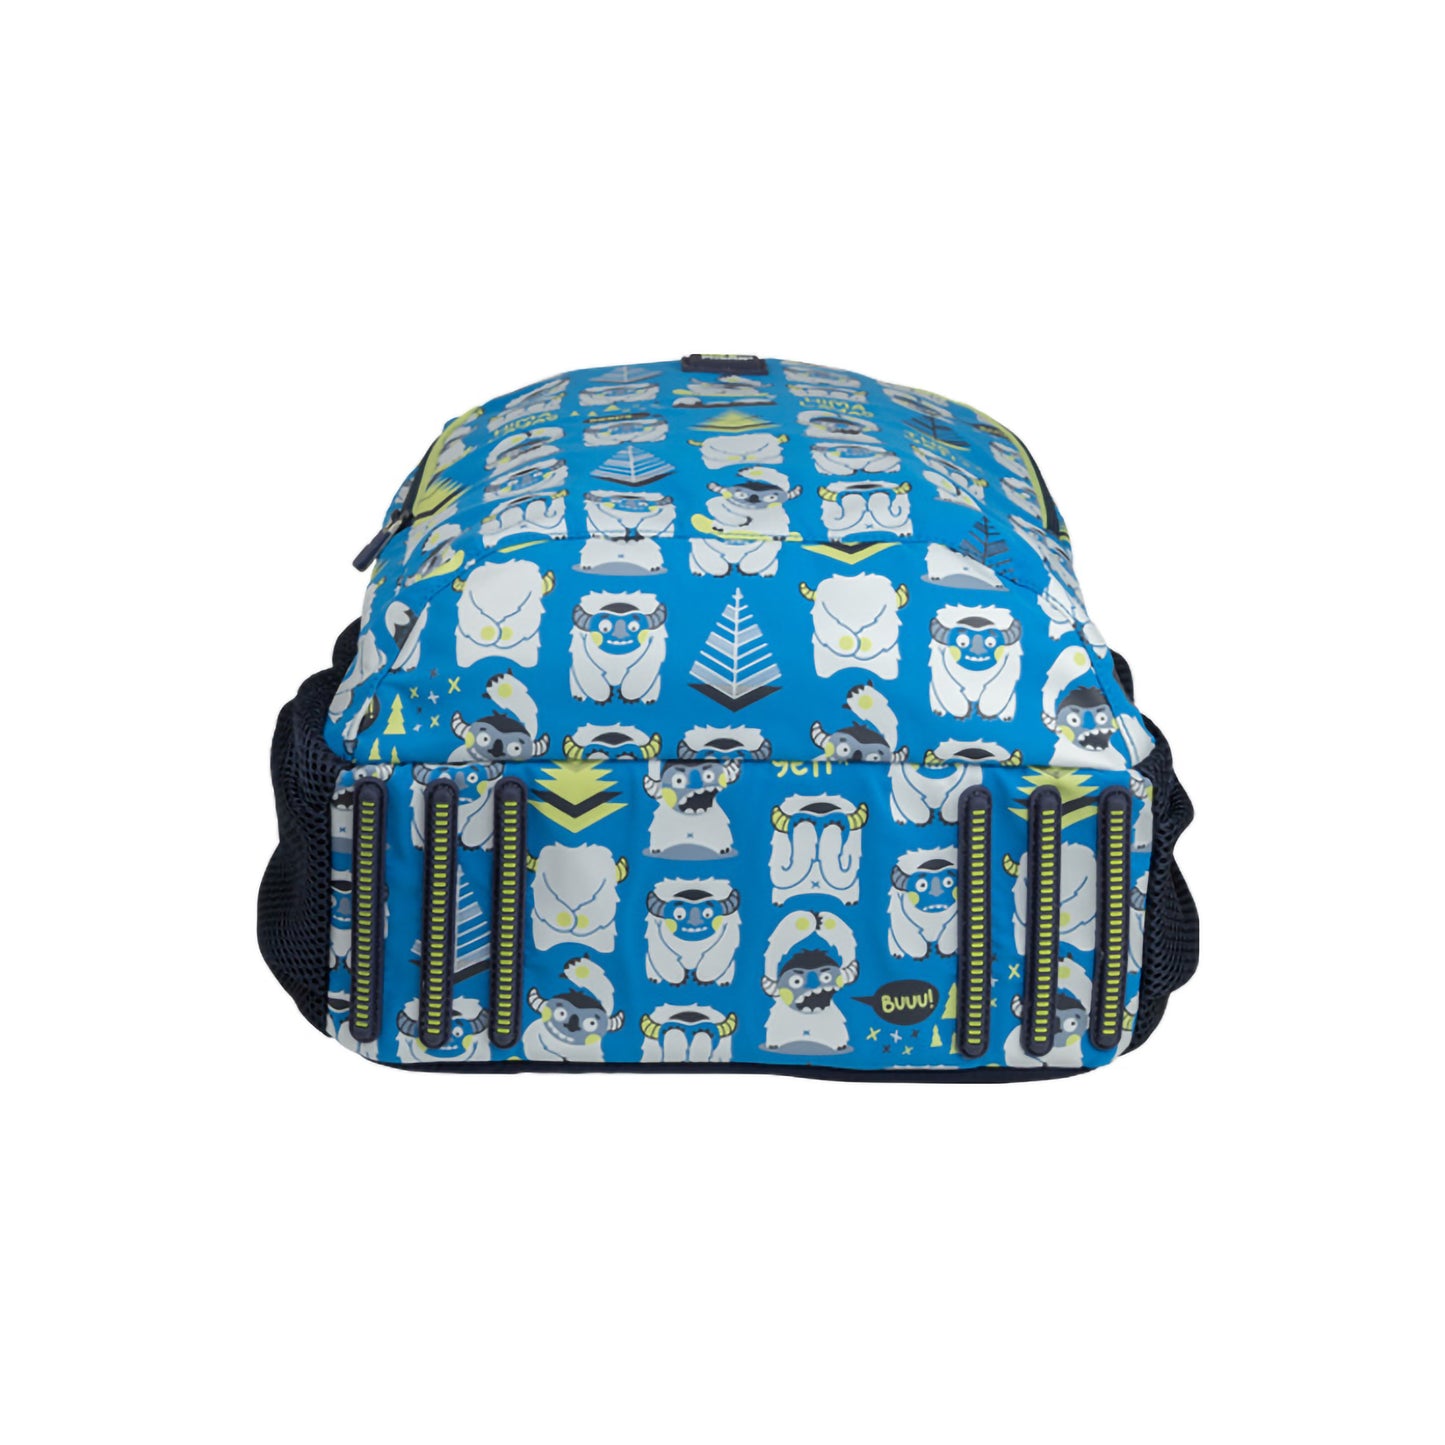 MILAN Large Backpack Yeti Blue Multicolor